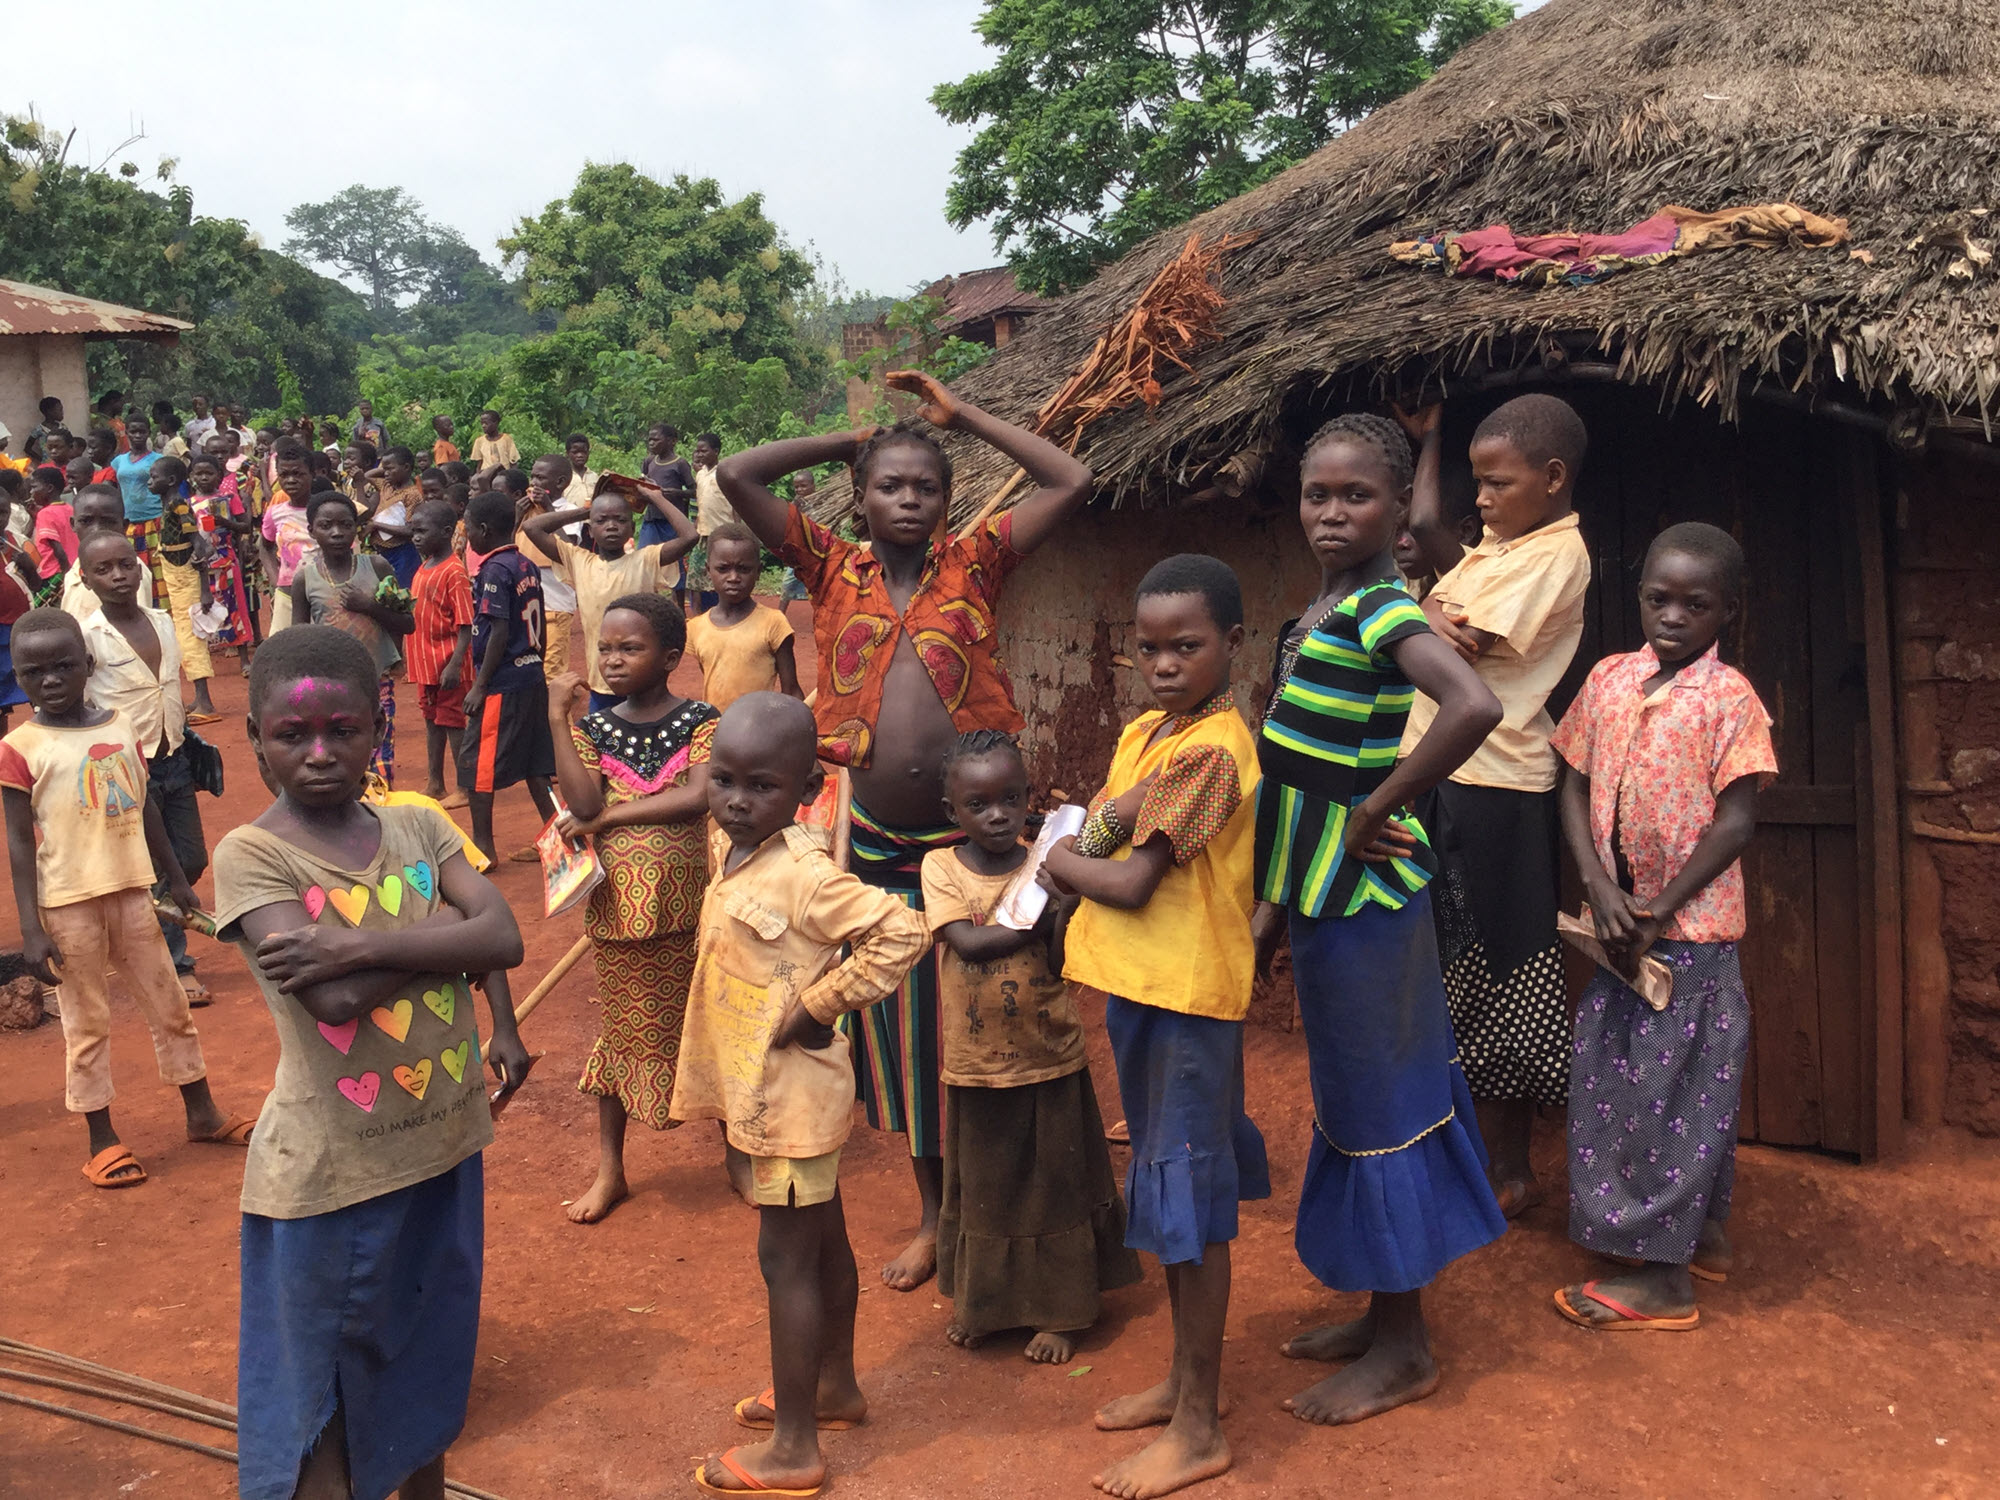 photos of children in the Congo